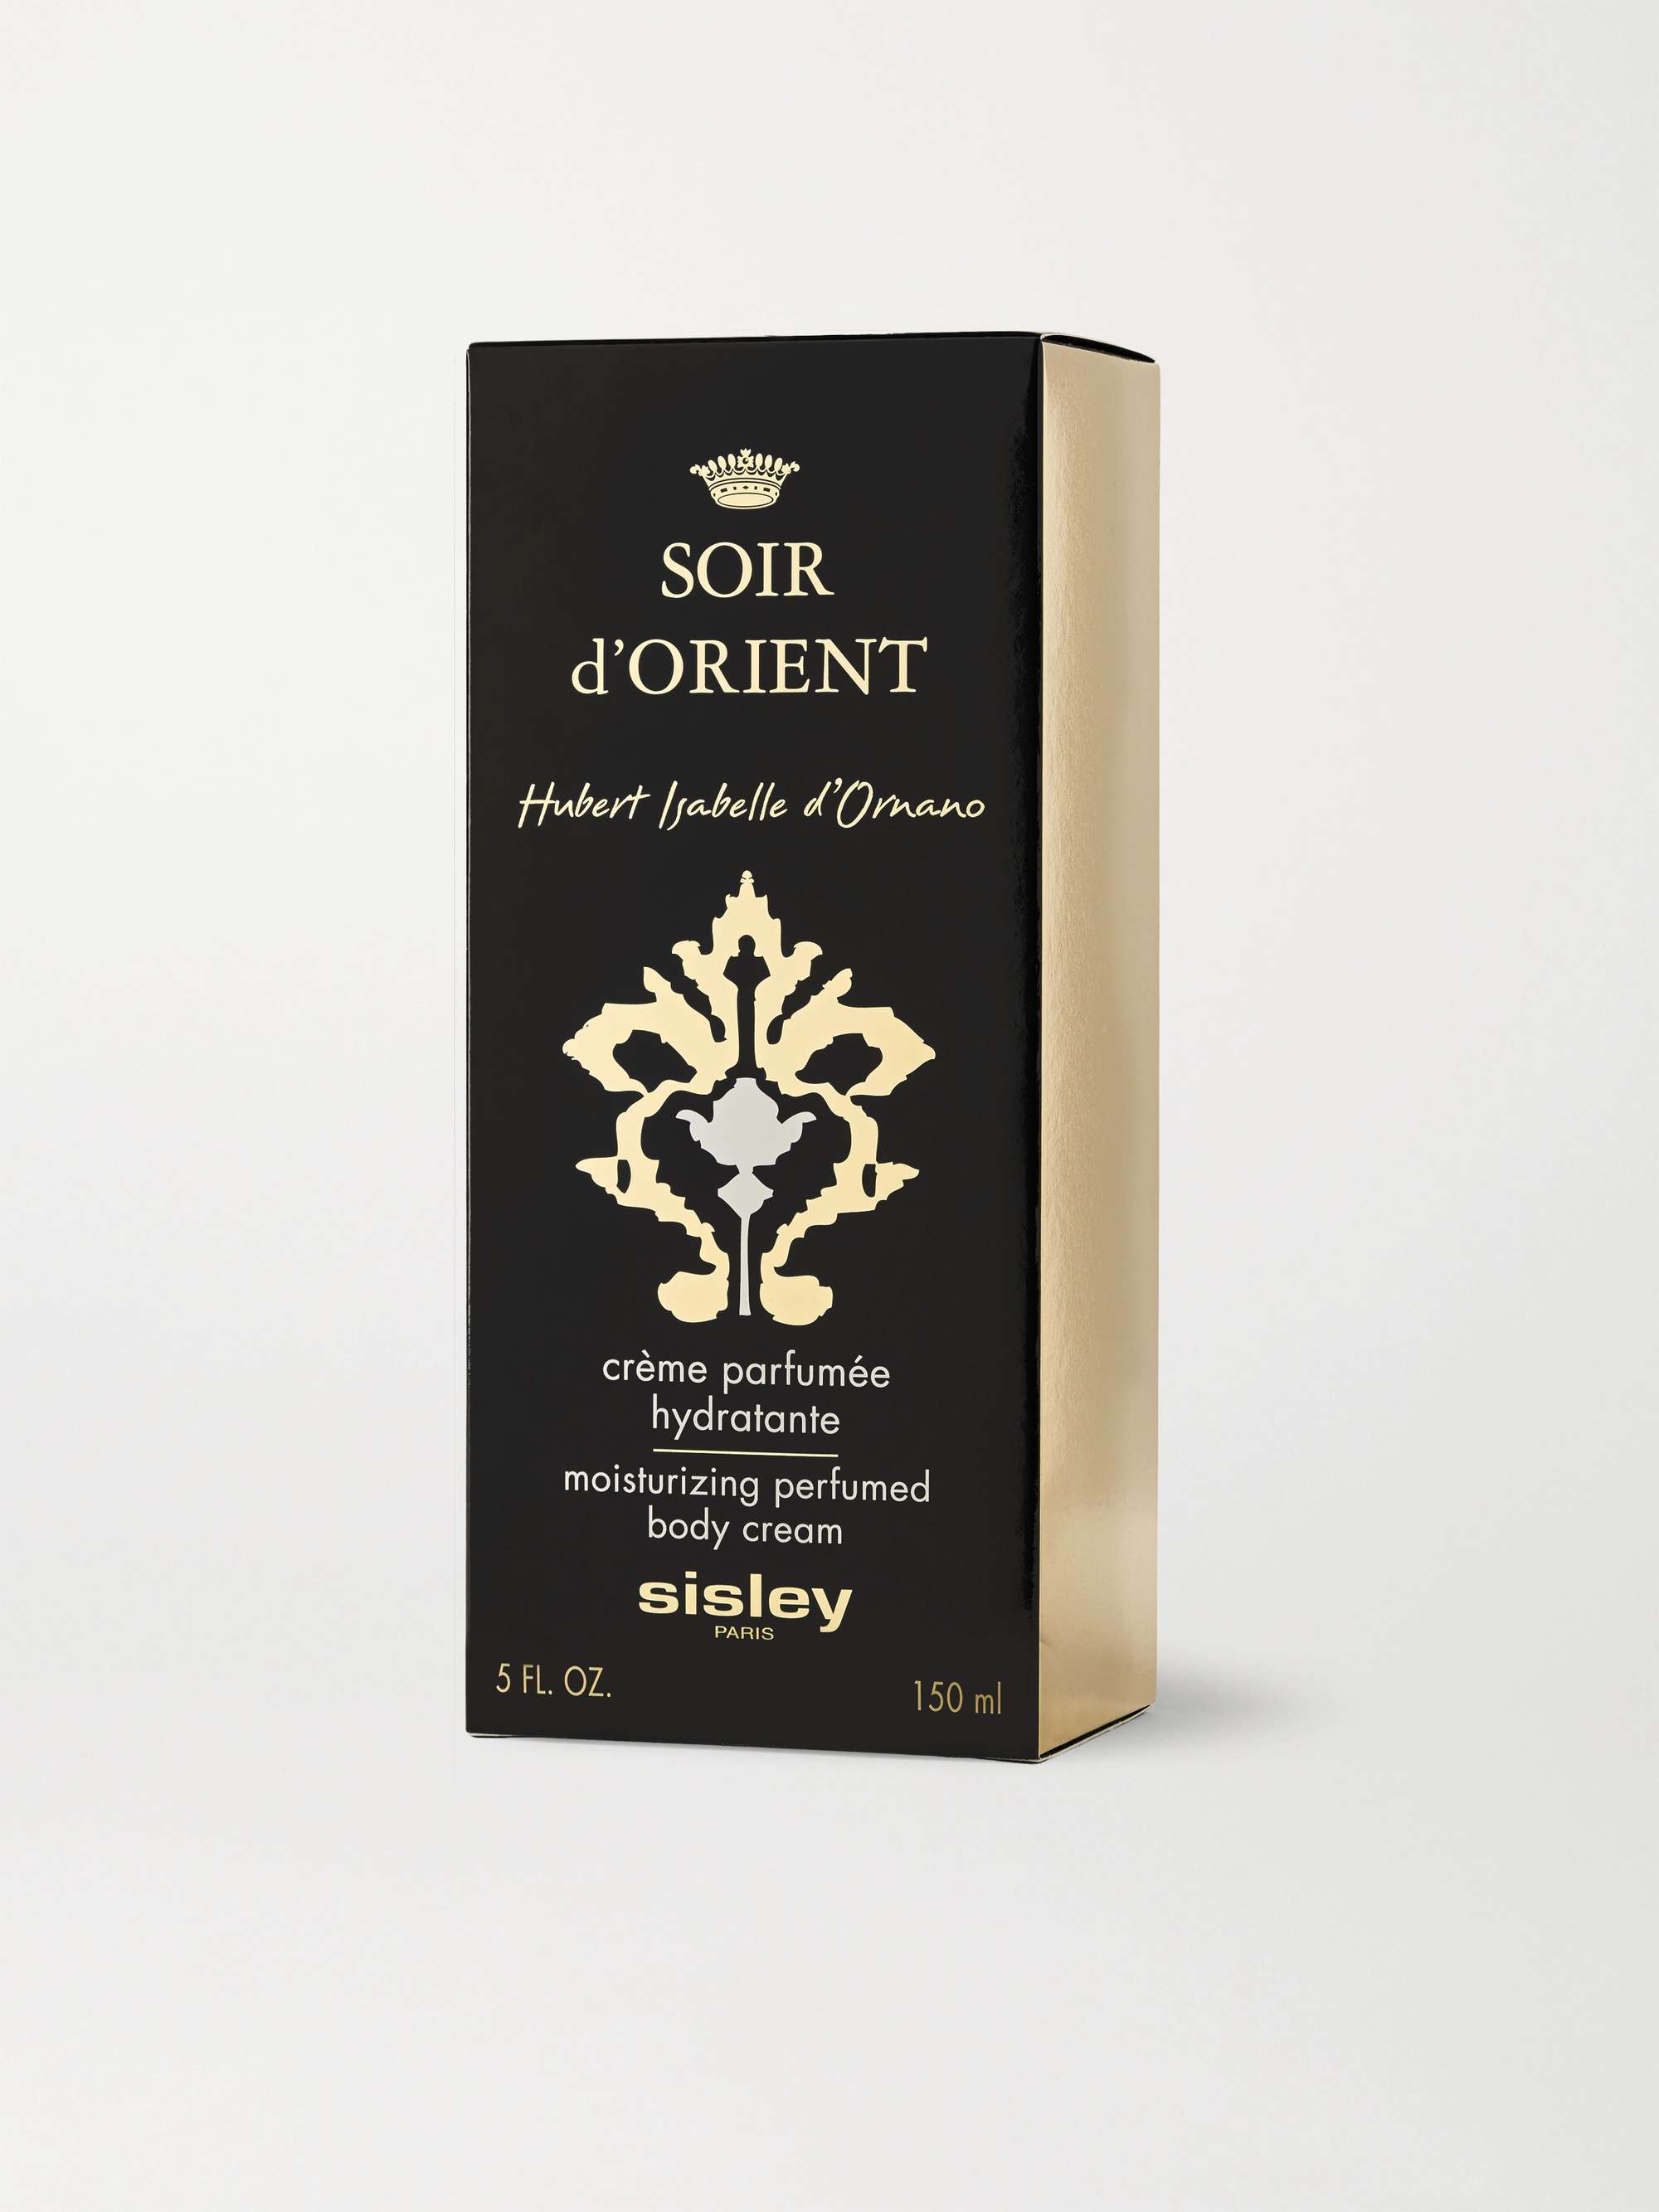 SISLEY PARIS Soir d'Orient Moisturizing Perfumed Body Cream, 150ml